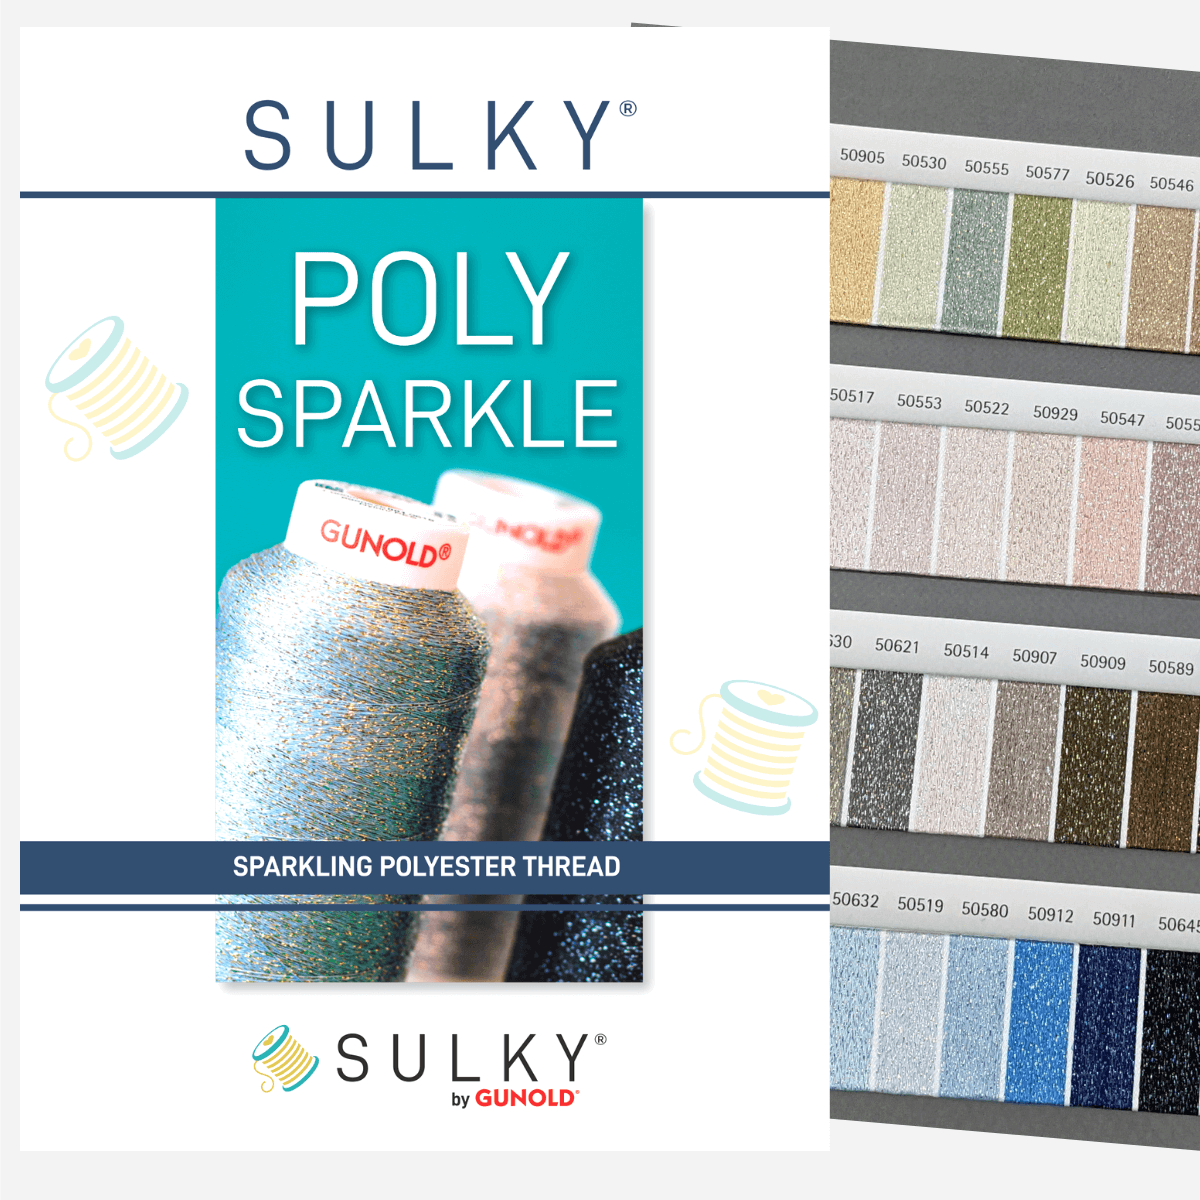 SULKY POLY SPARKLE Thread Card - with
actual thread